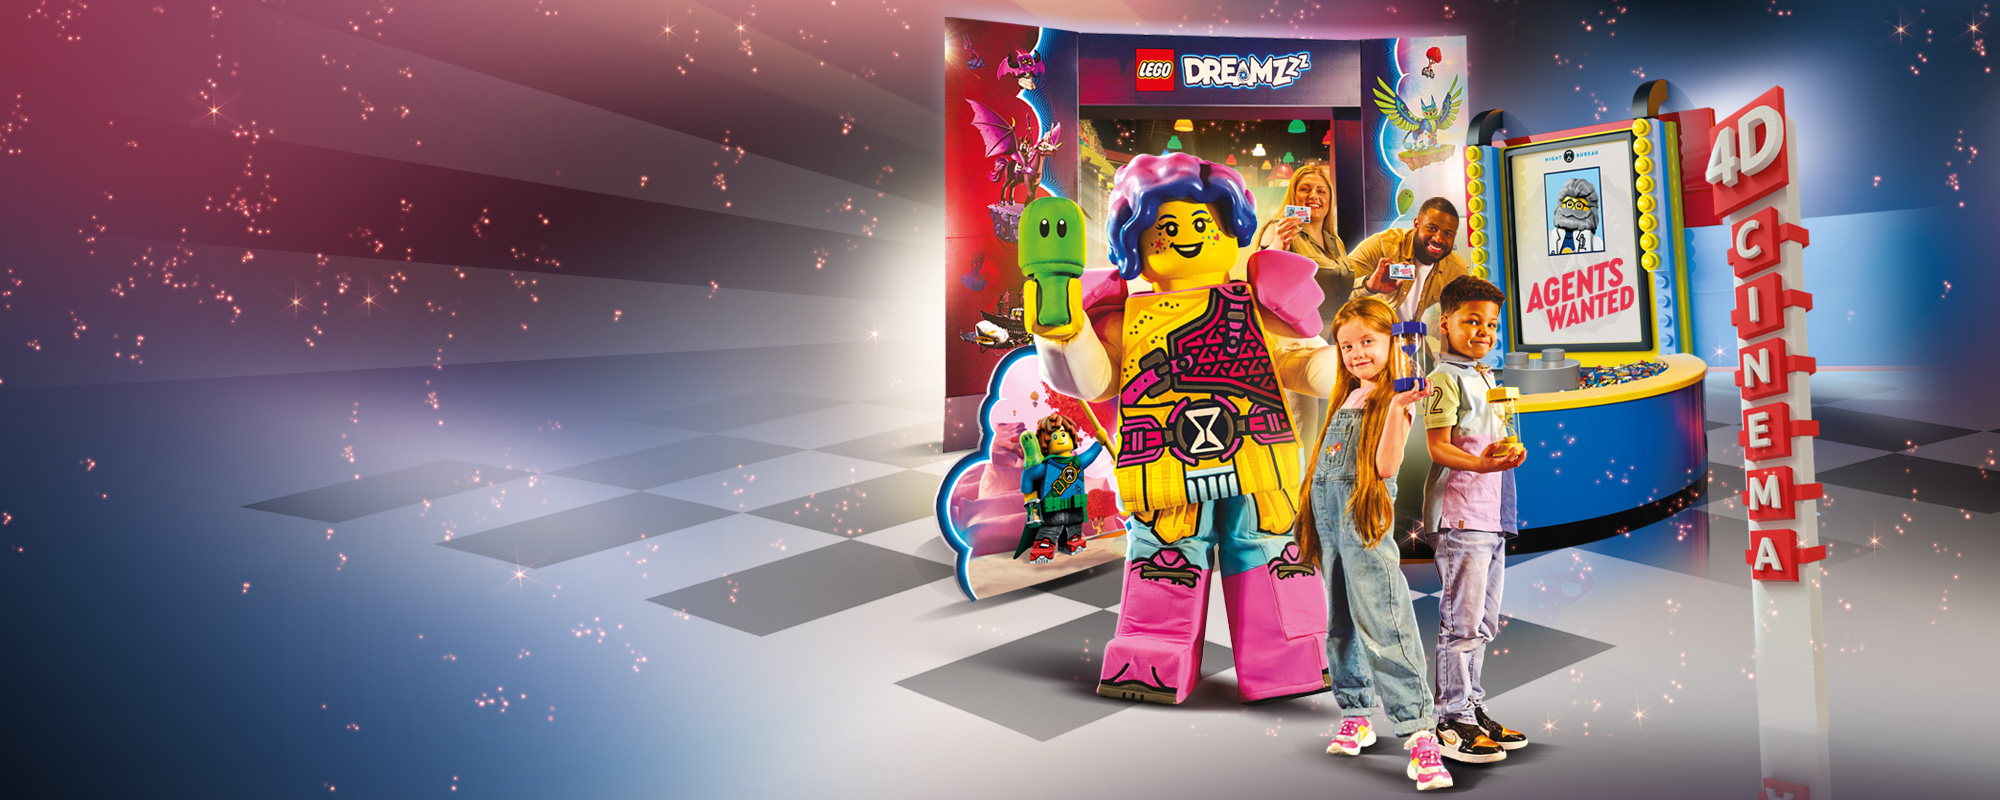 LEGO DREAMZzz Banner